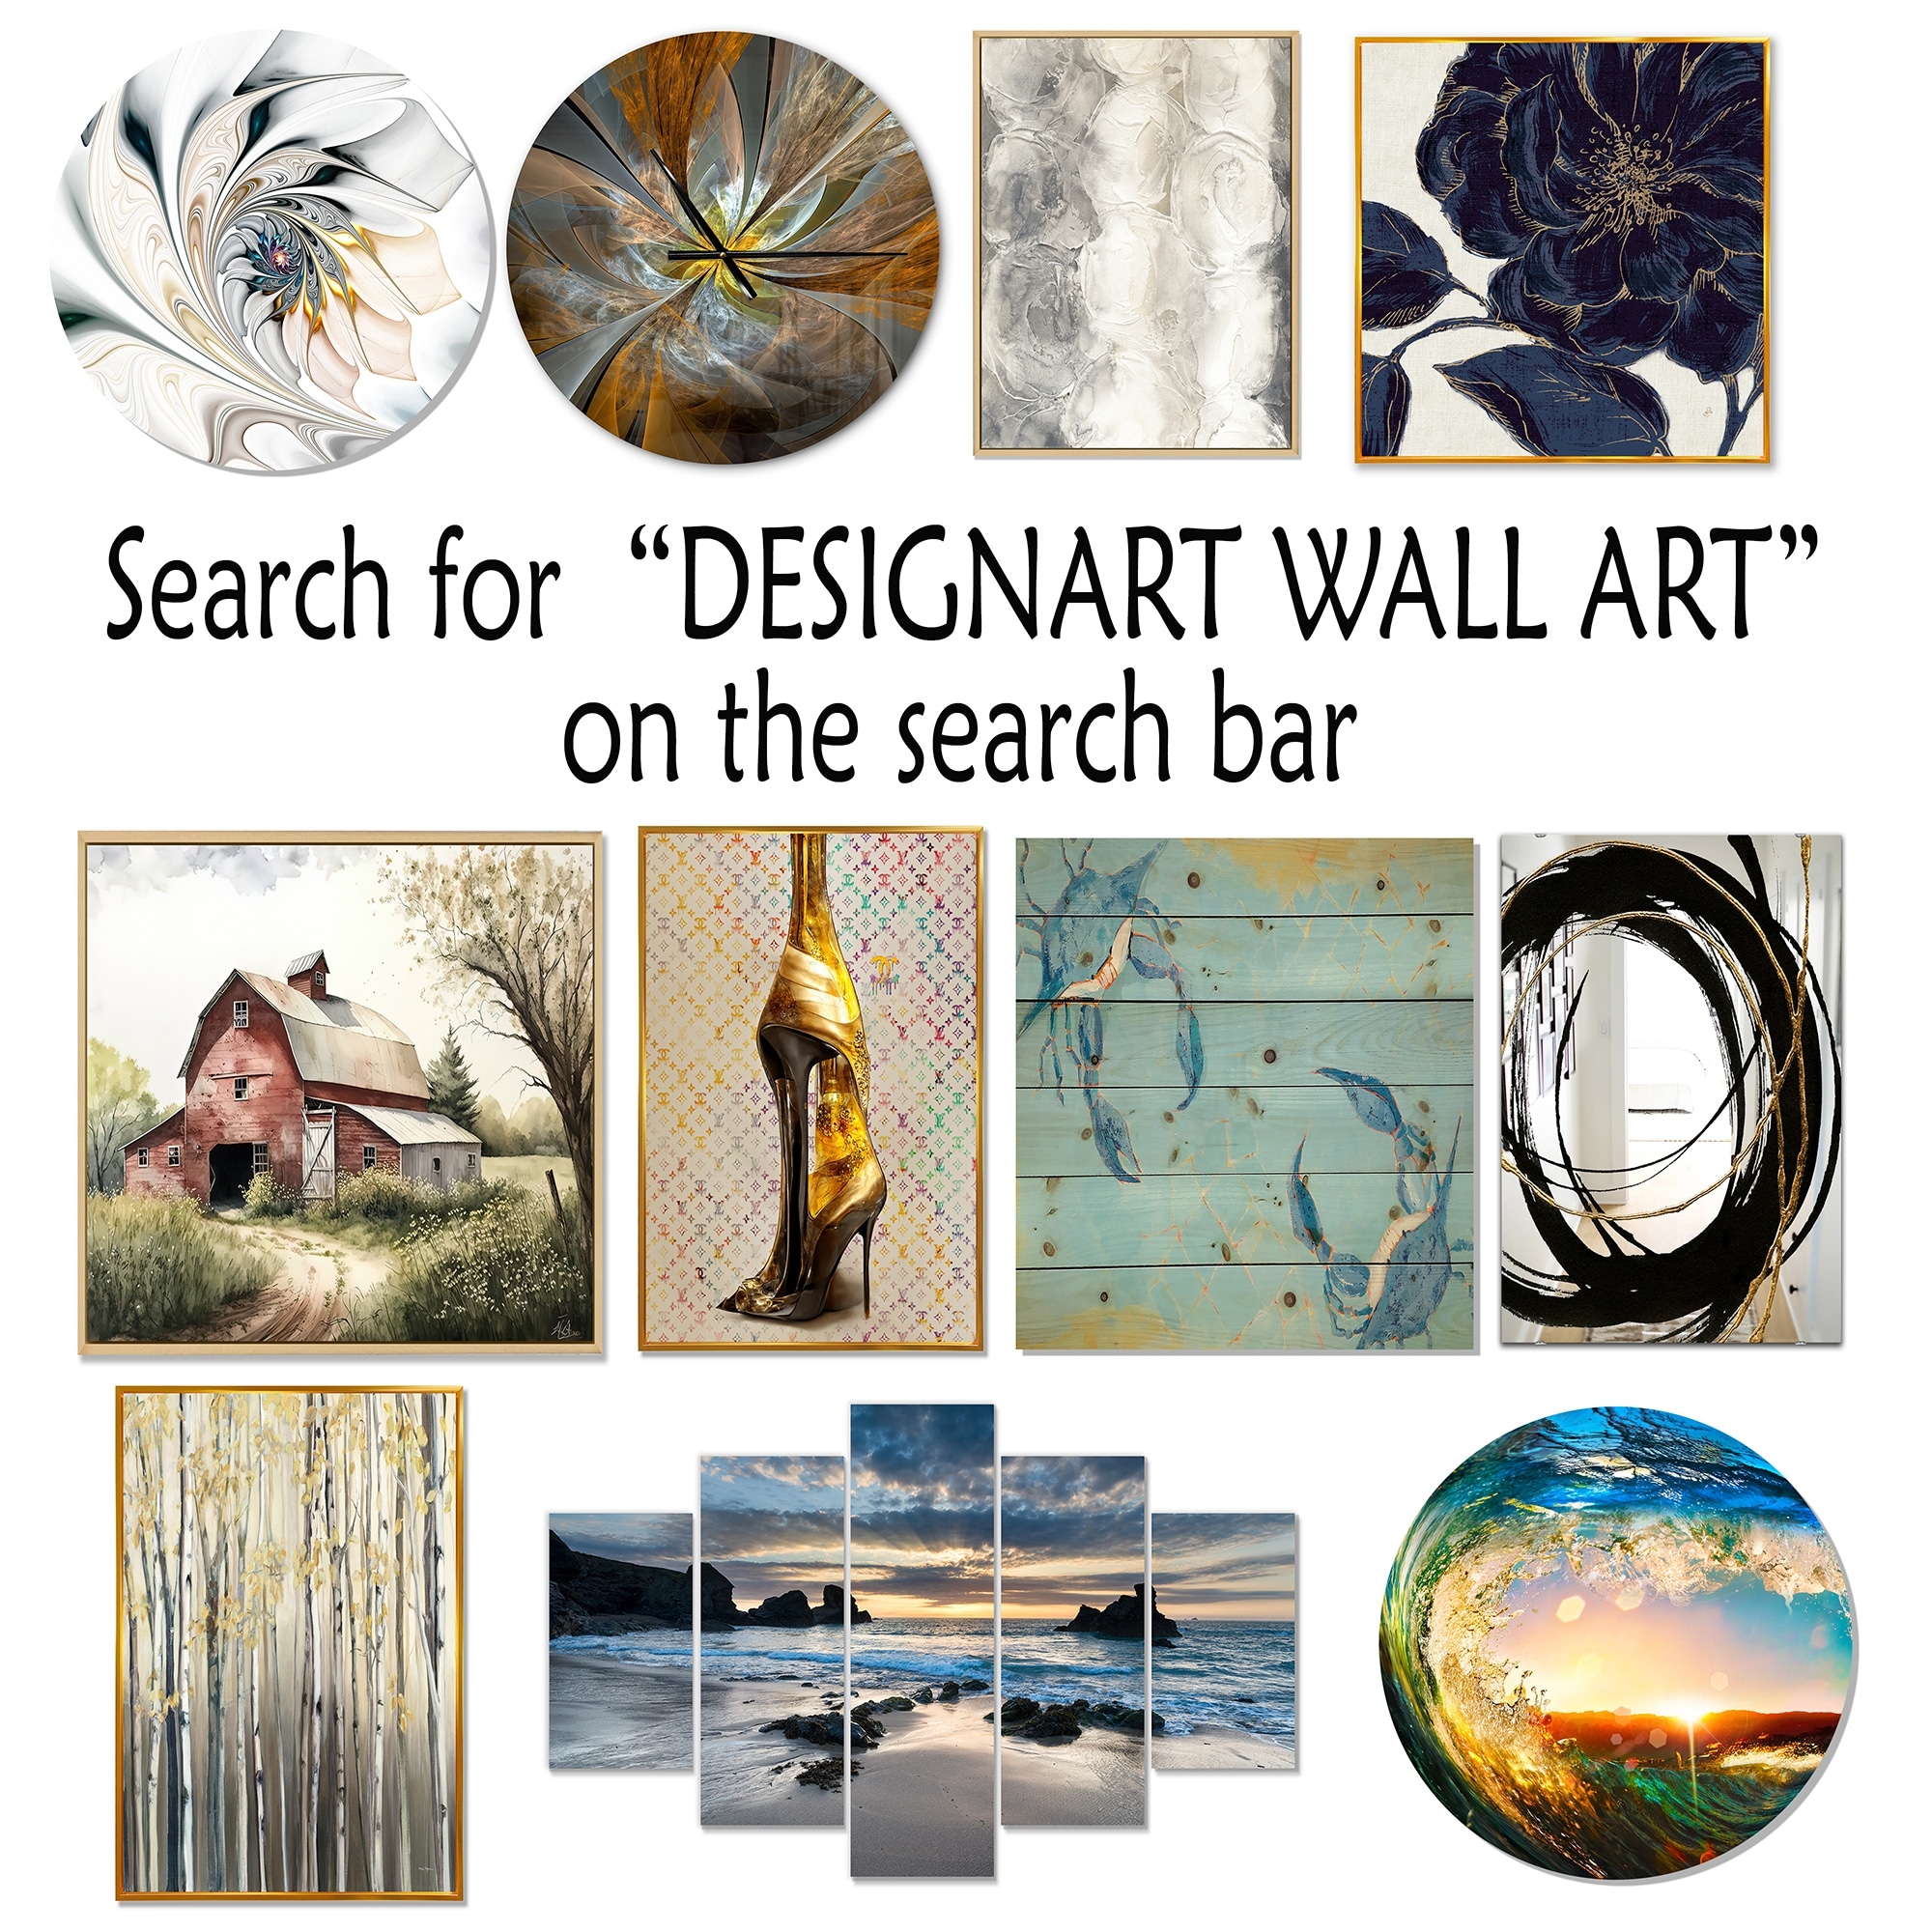 Designart Coastal and Beach Collection Coastal Wall Art set of 5 pieces -  Blue - On Sale - Bed Bath & Beyond - 26882036